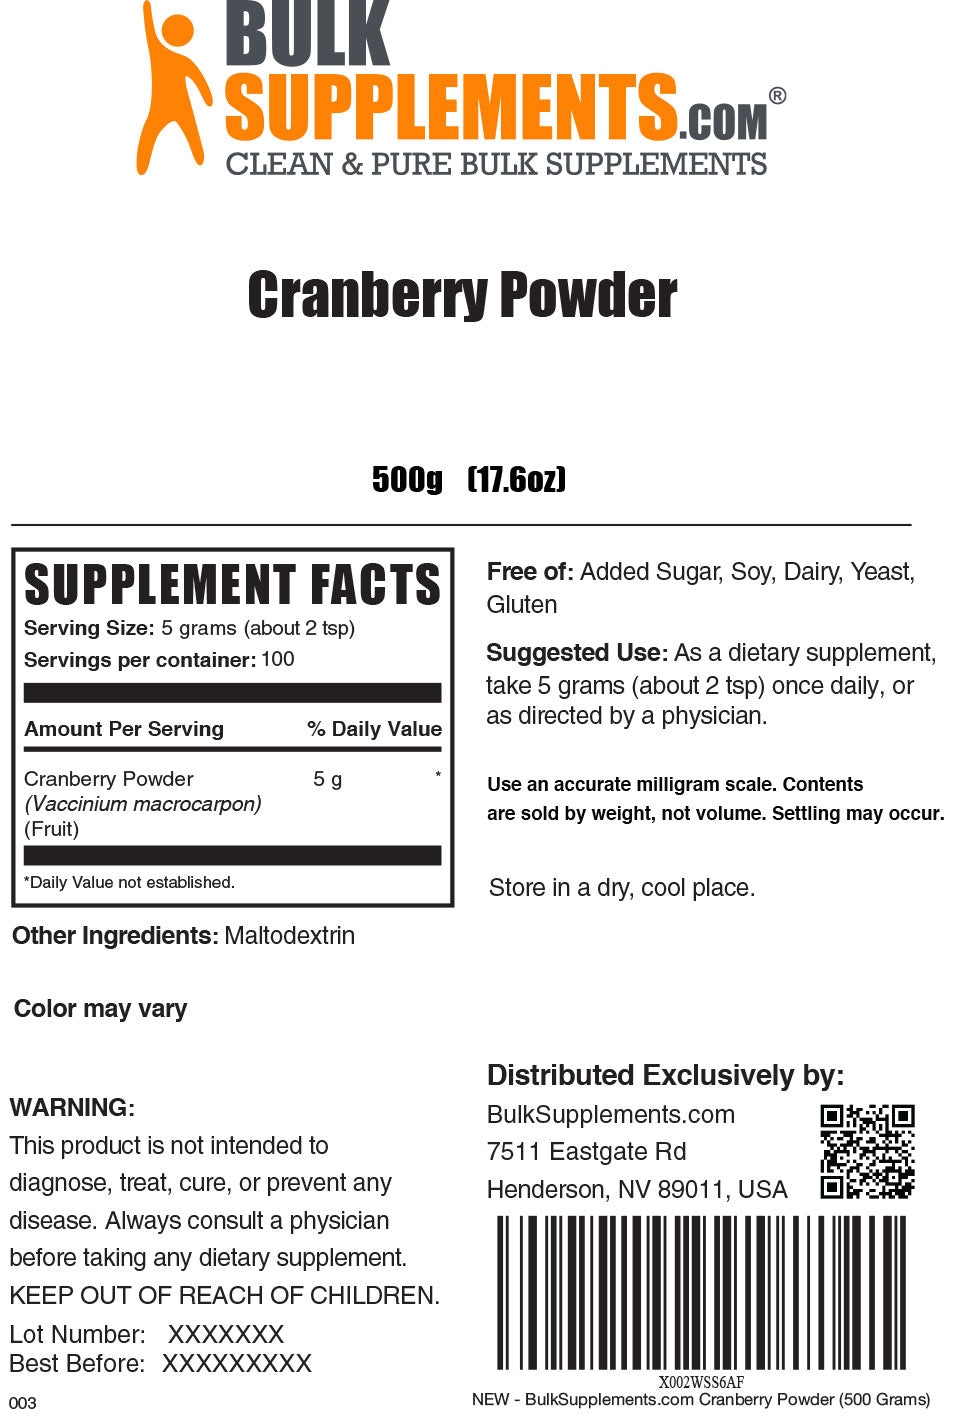 Cranberrypoeder